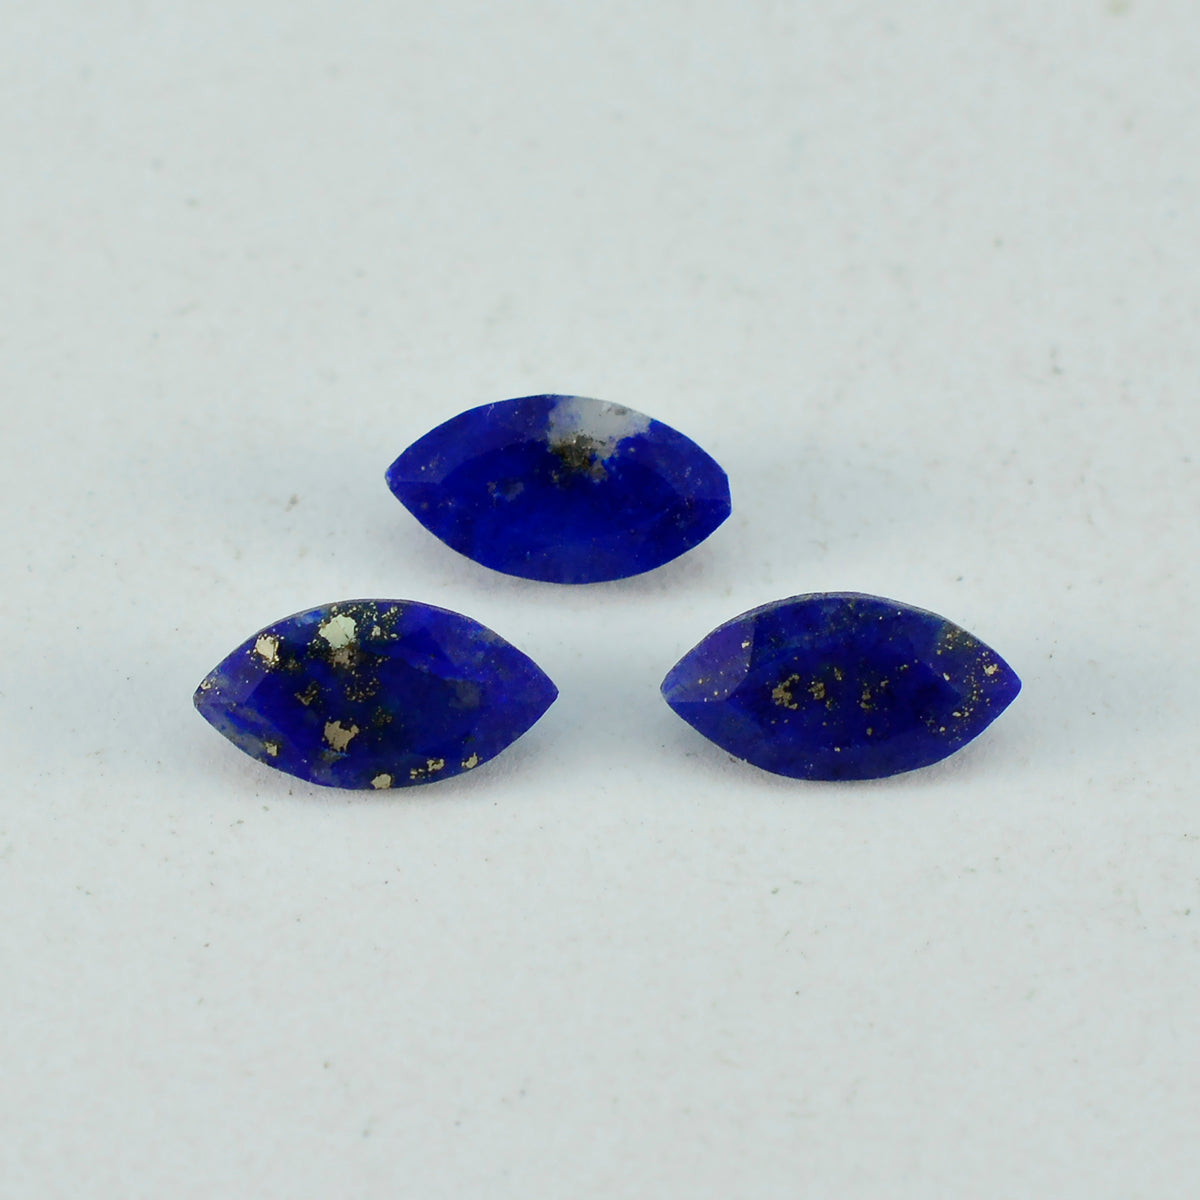 Riyogems 1PC Genuine Blue Lapis Lazuli Faceted 7x14 mm Marquise Shape A+1 Quality Stone